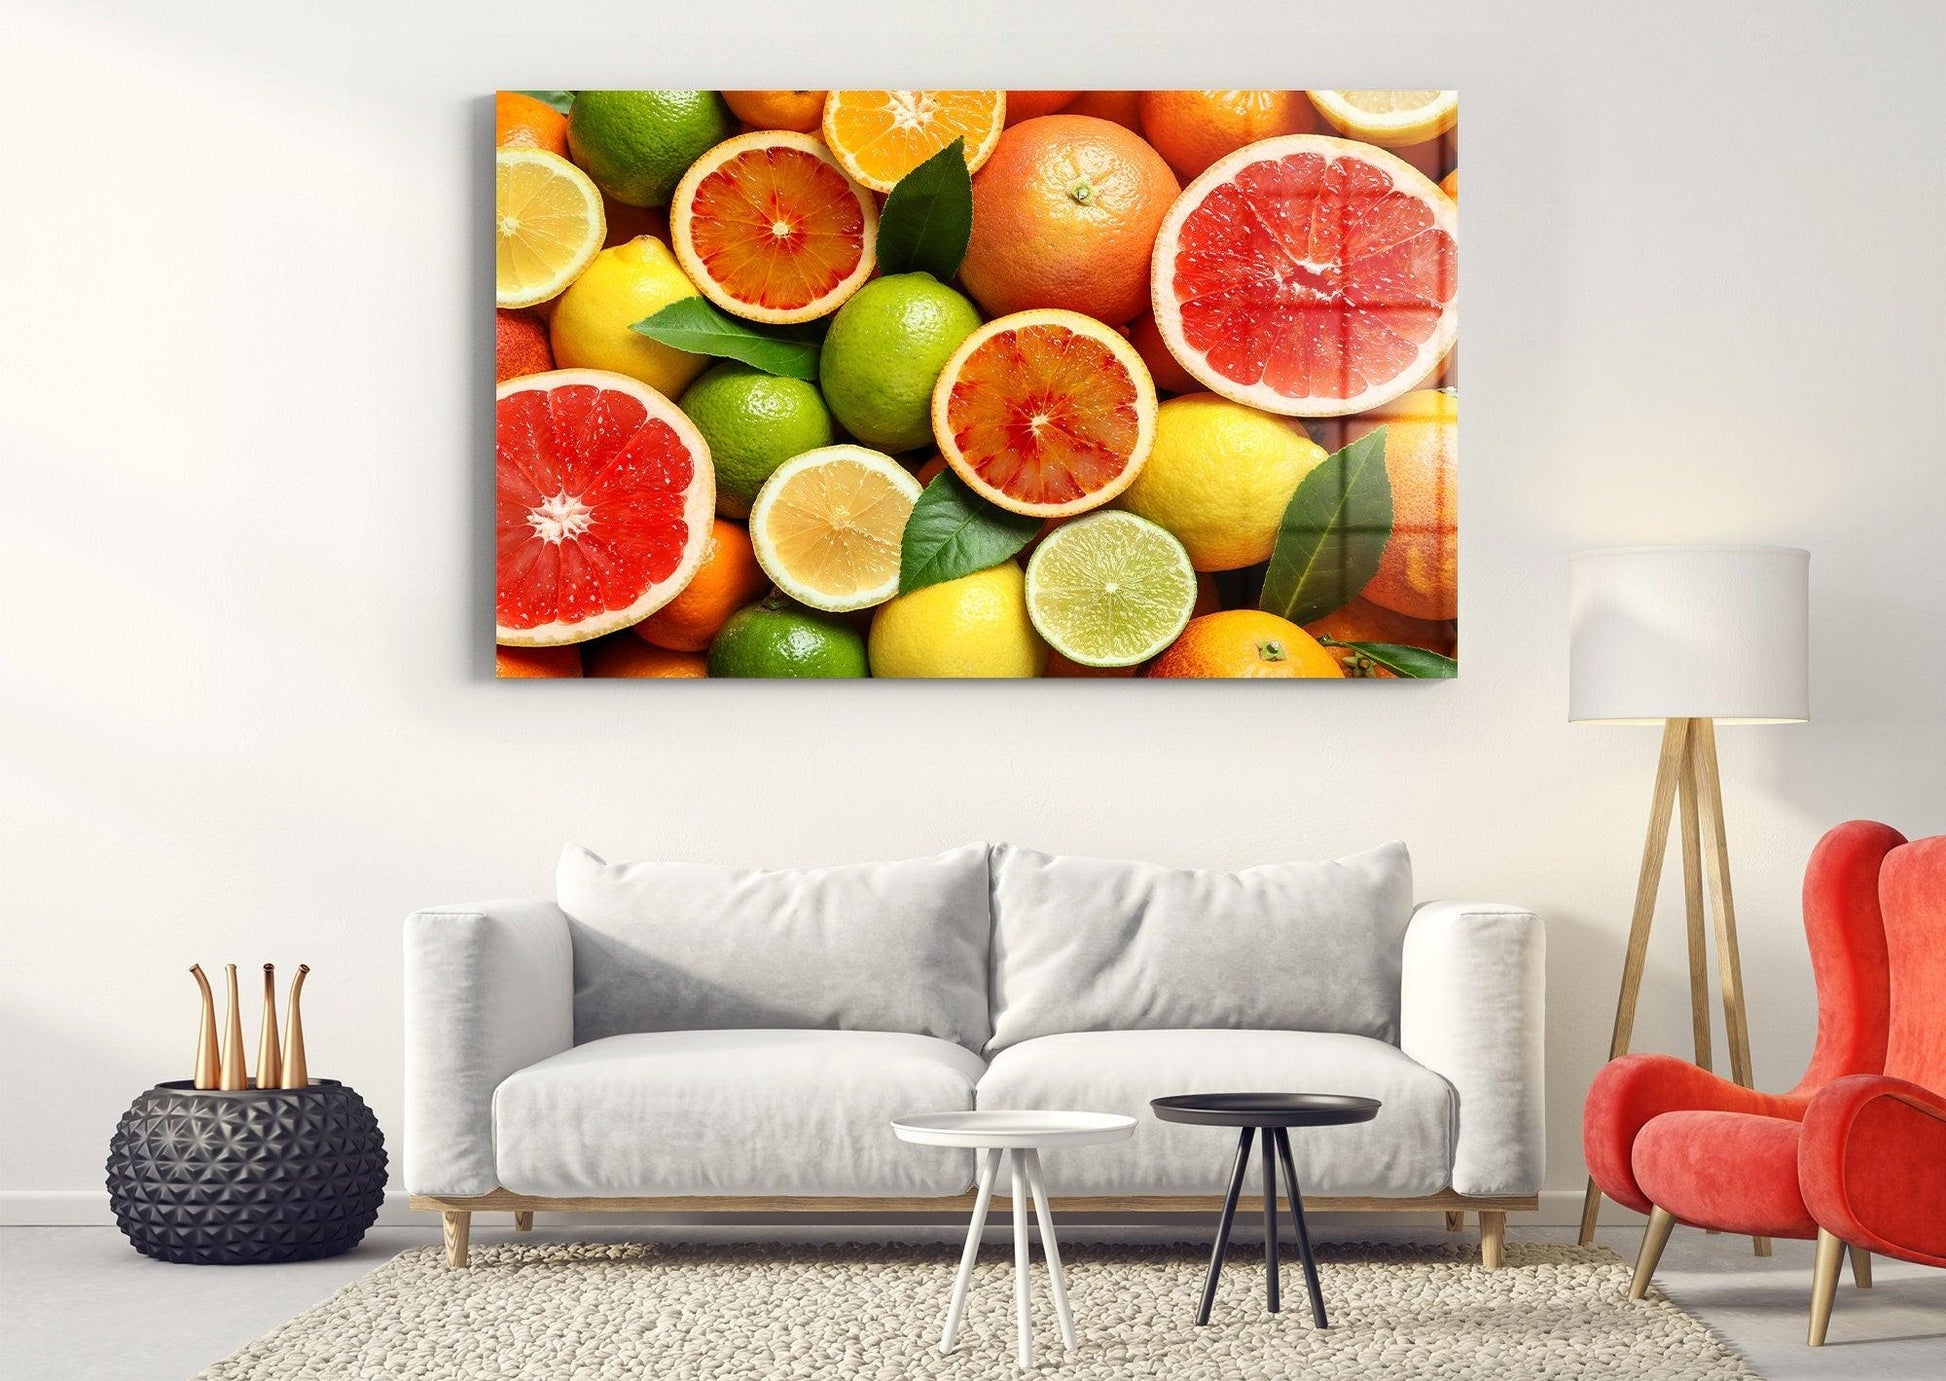 fruit canvas wall art| Unframed Wall Art Prints, fruit wall poster, kitchen wall poster, kitchen wall decor, minimalist decor wall art - TrendiArt